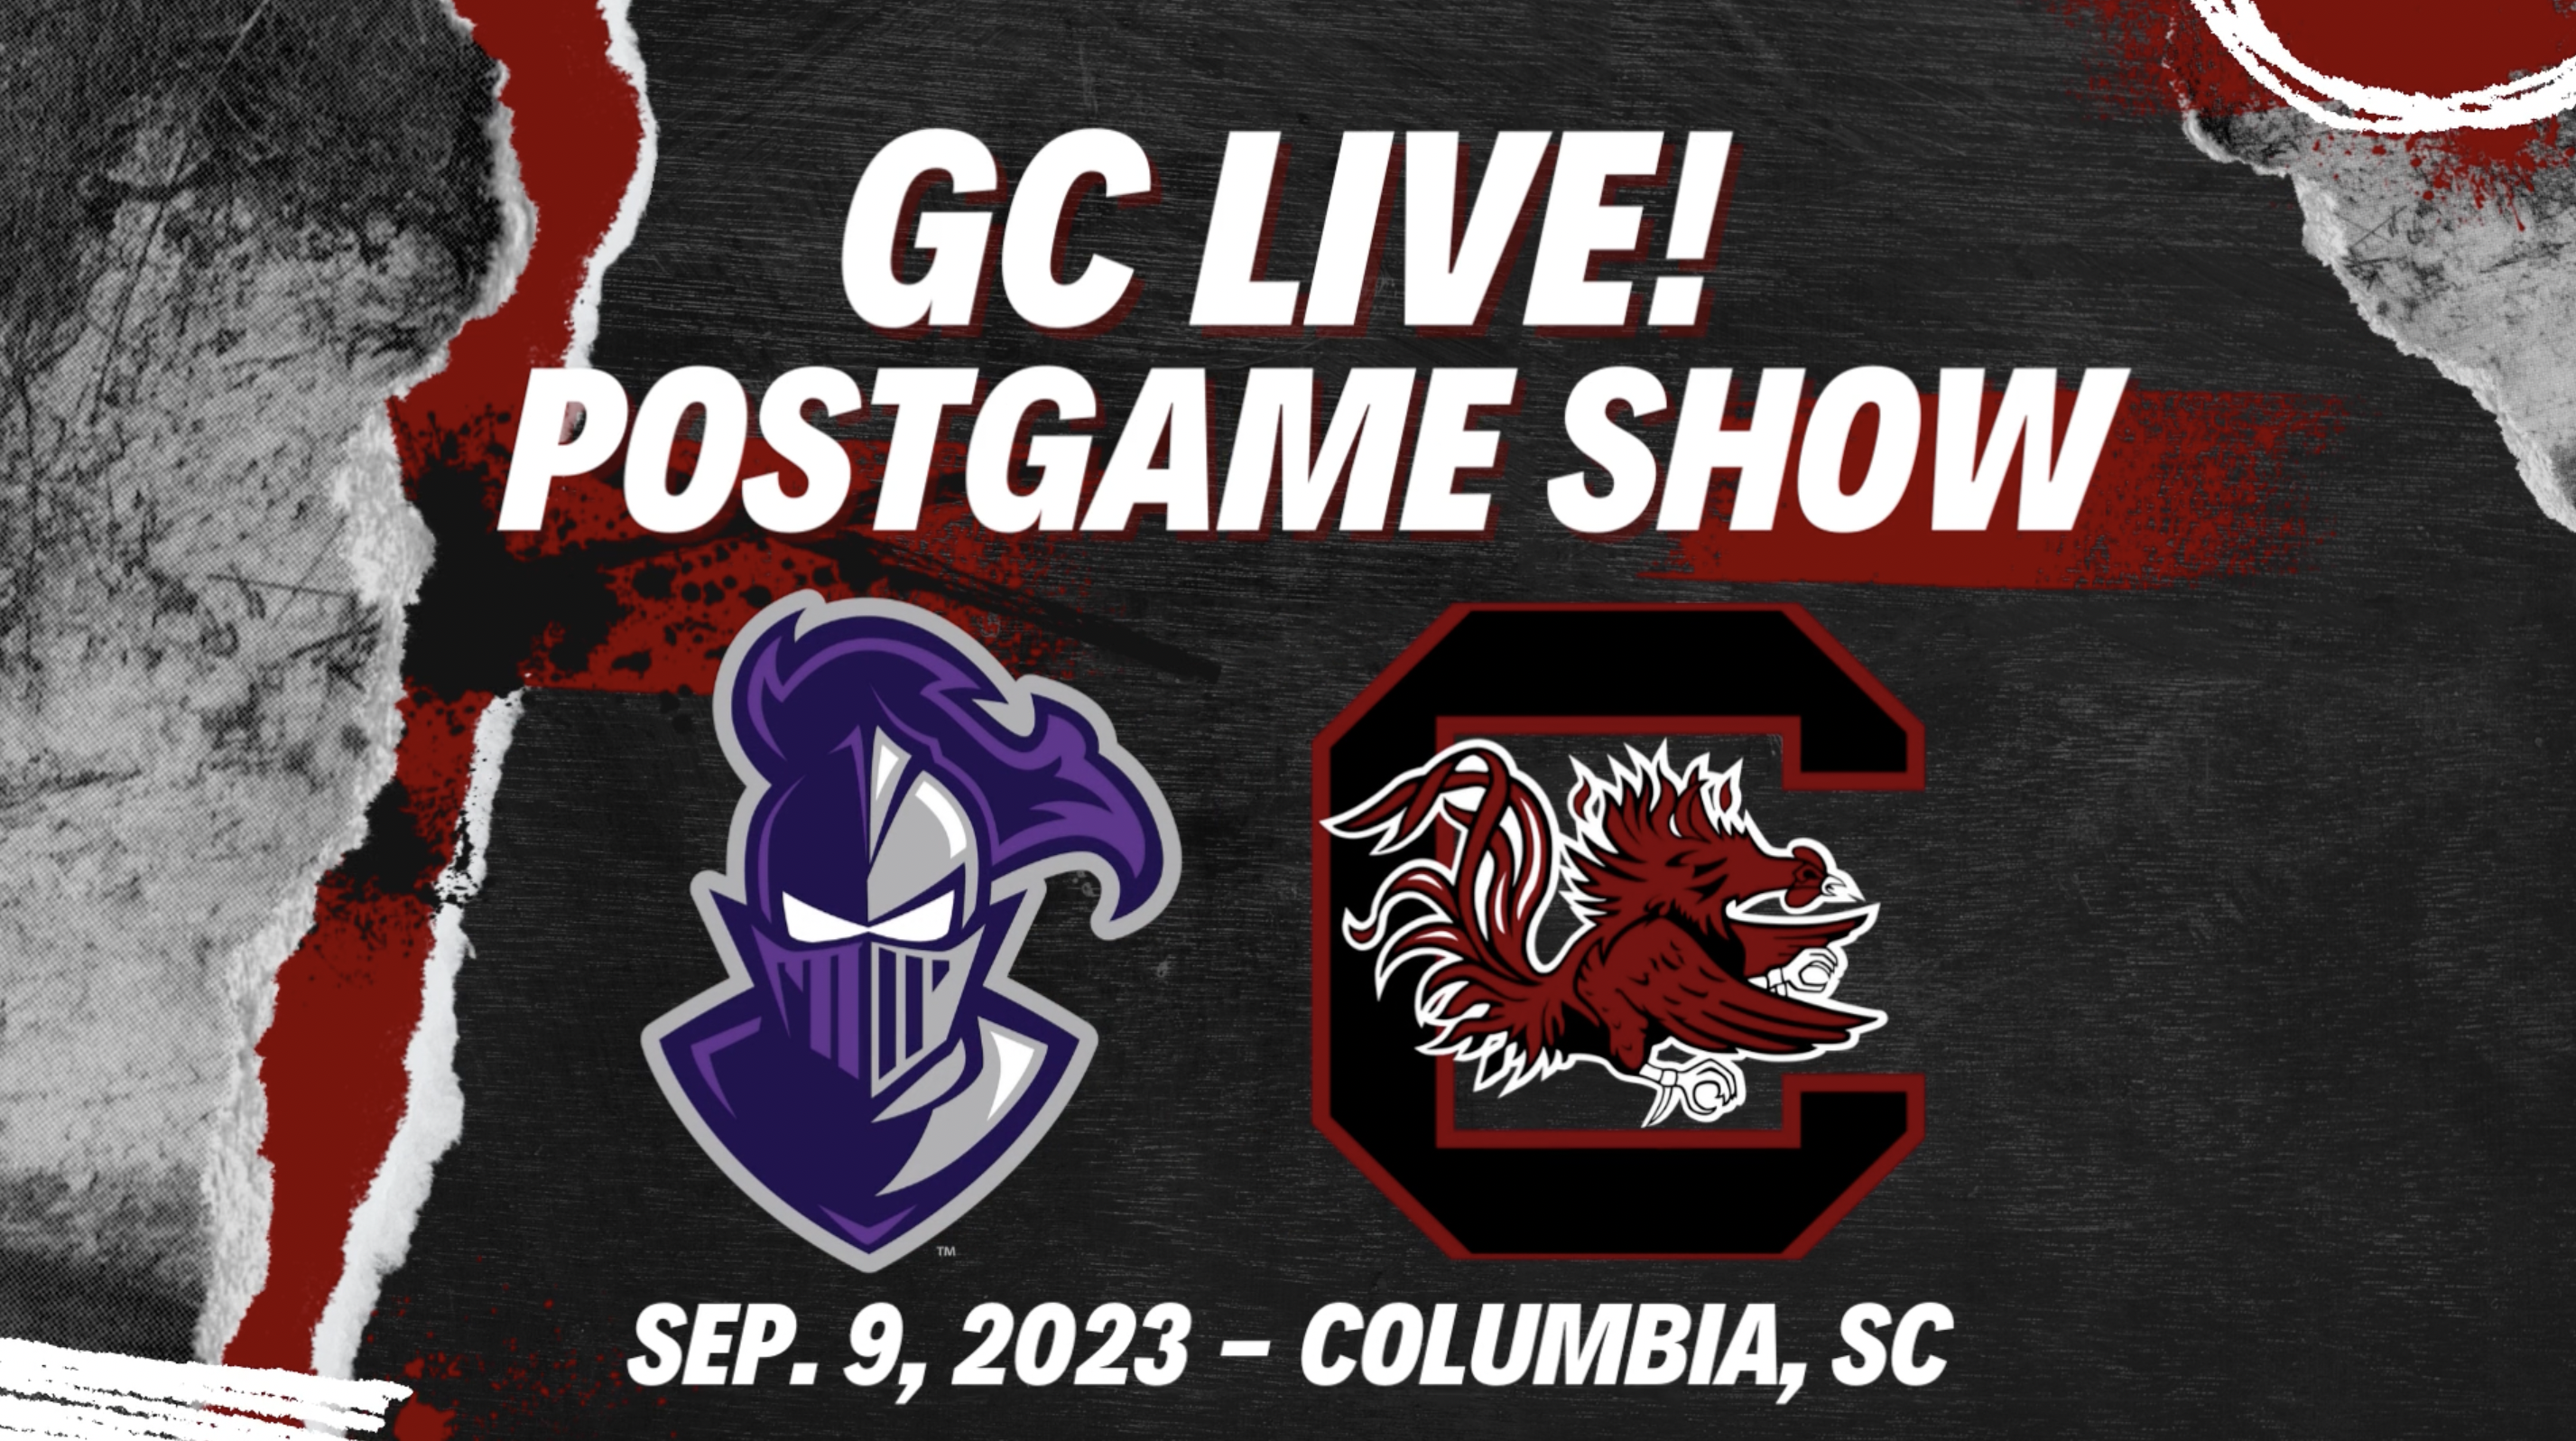 GC Live Postgame Show: South Carolina vs Furman with Mike Uva, Garrett Anderson